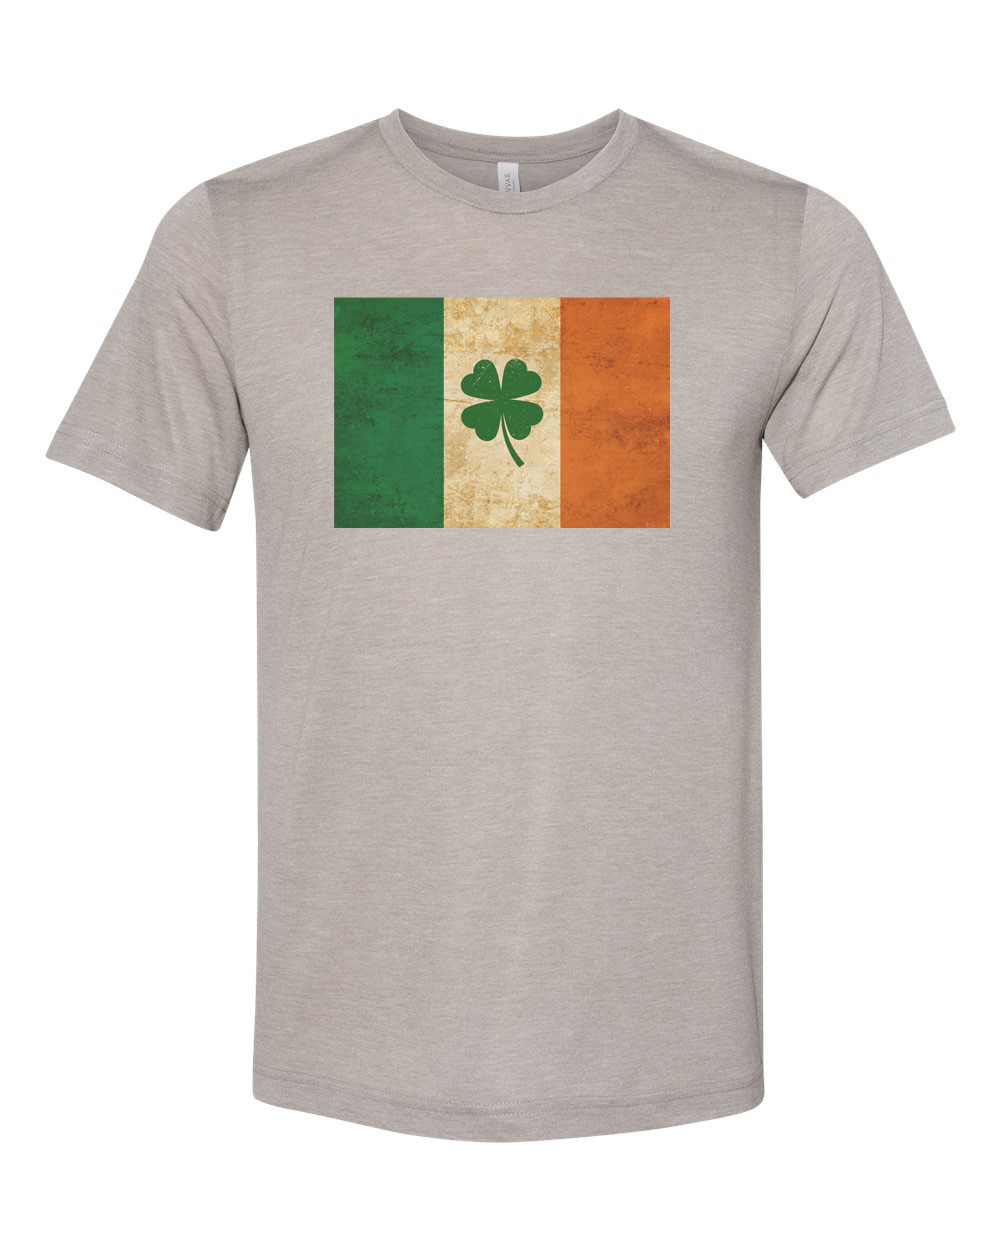 St. Patricks Day Shirt, Shamrock Shirt, Irish Flag, Ireland Shirt, Unisex Fit, Irish Shirt, Shamrock, Irish Flag Shirt, St Patty's Shirt, Heather Stone, LARGE - image 1 of 1